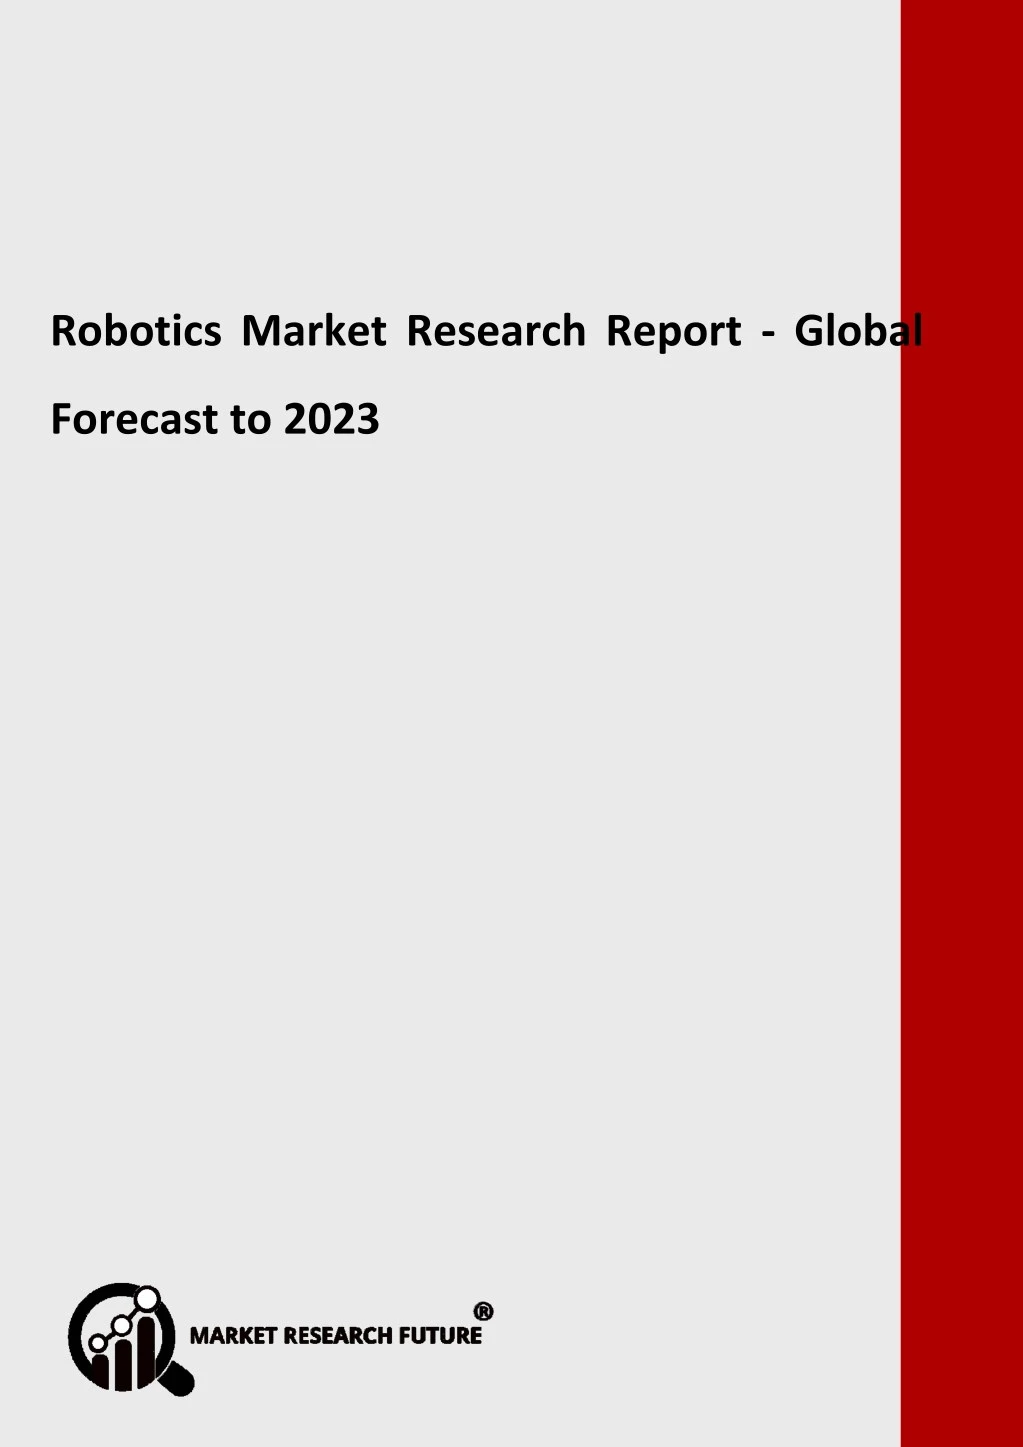 robotics market research report global forecast